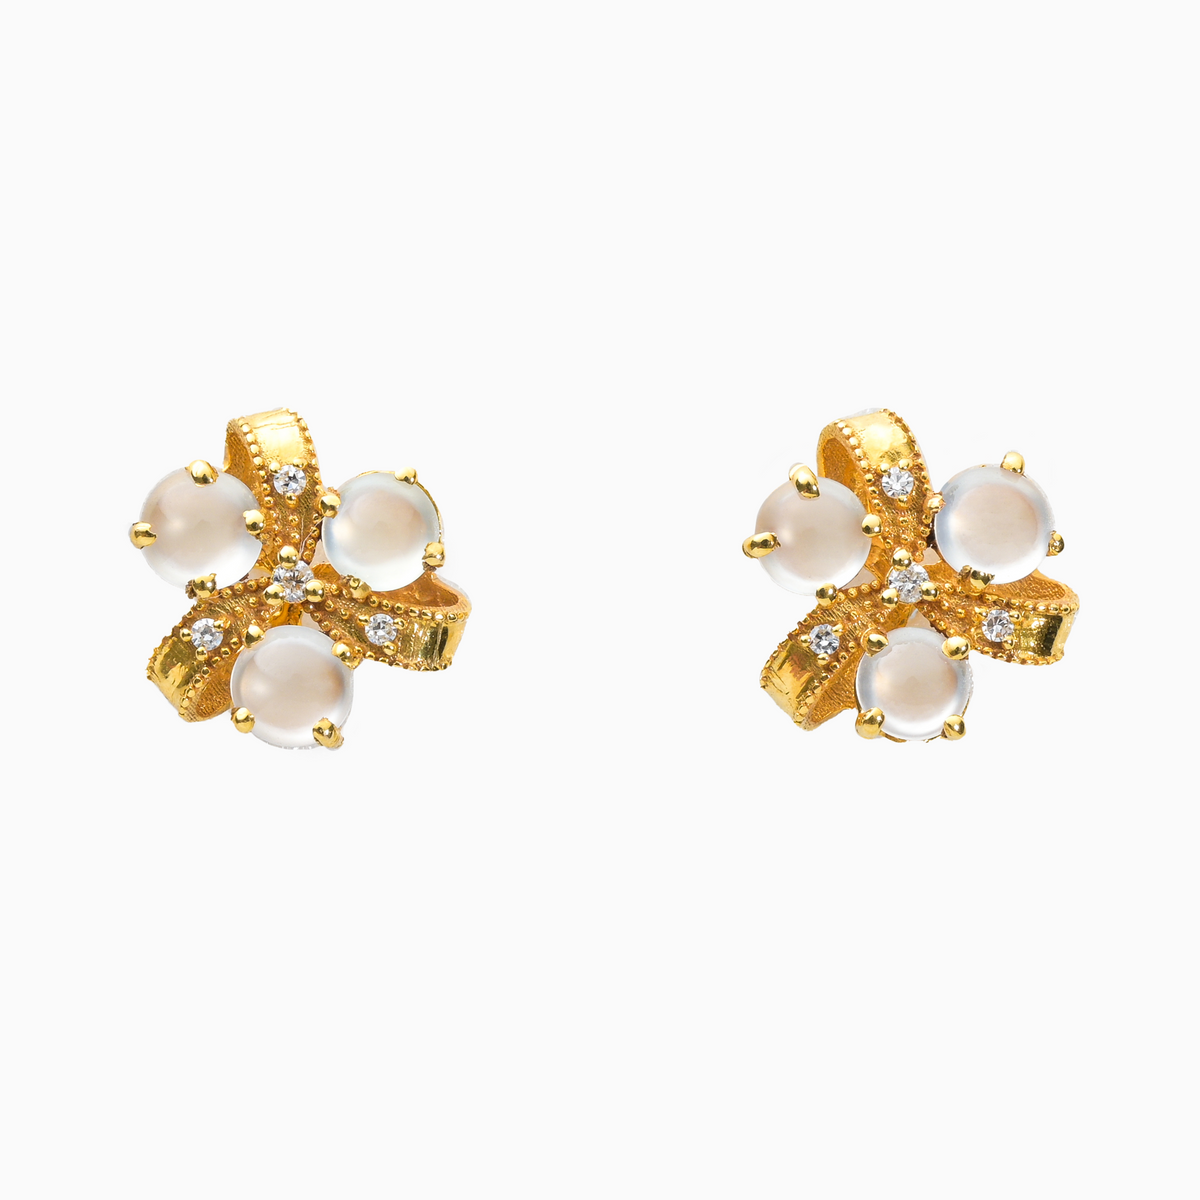 Silken White Jadeite Diamond Earrings